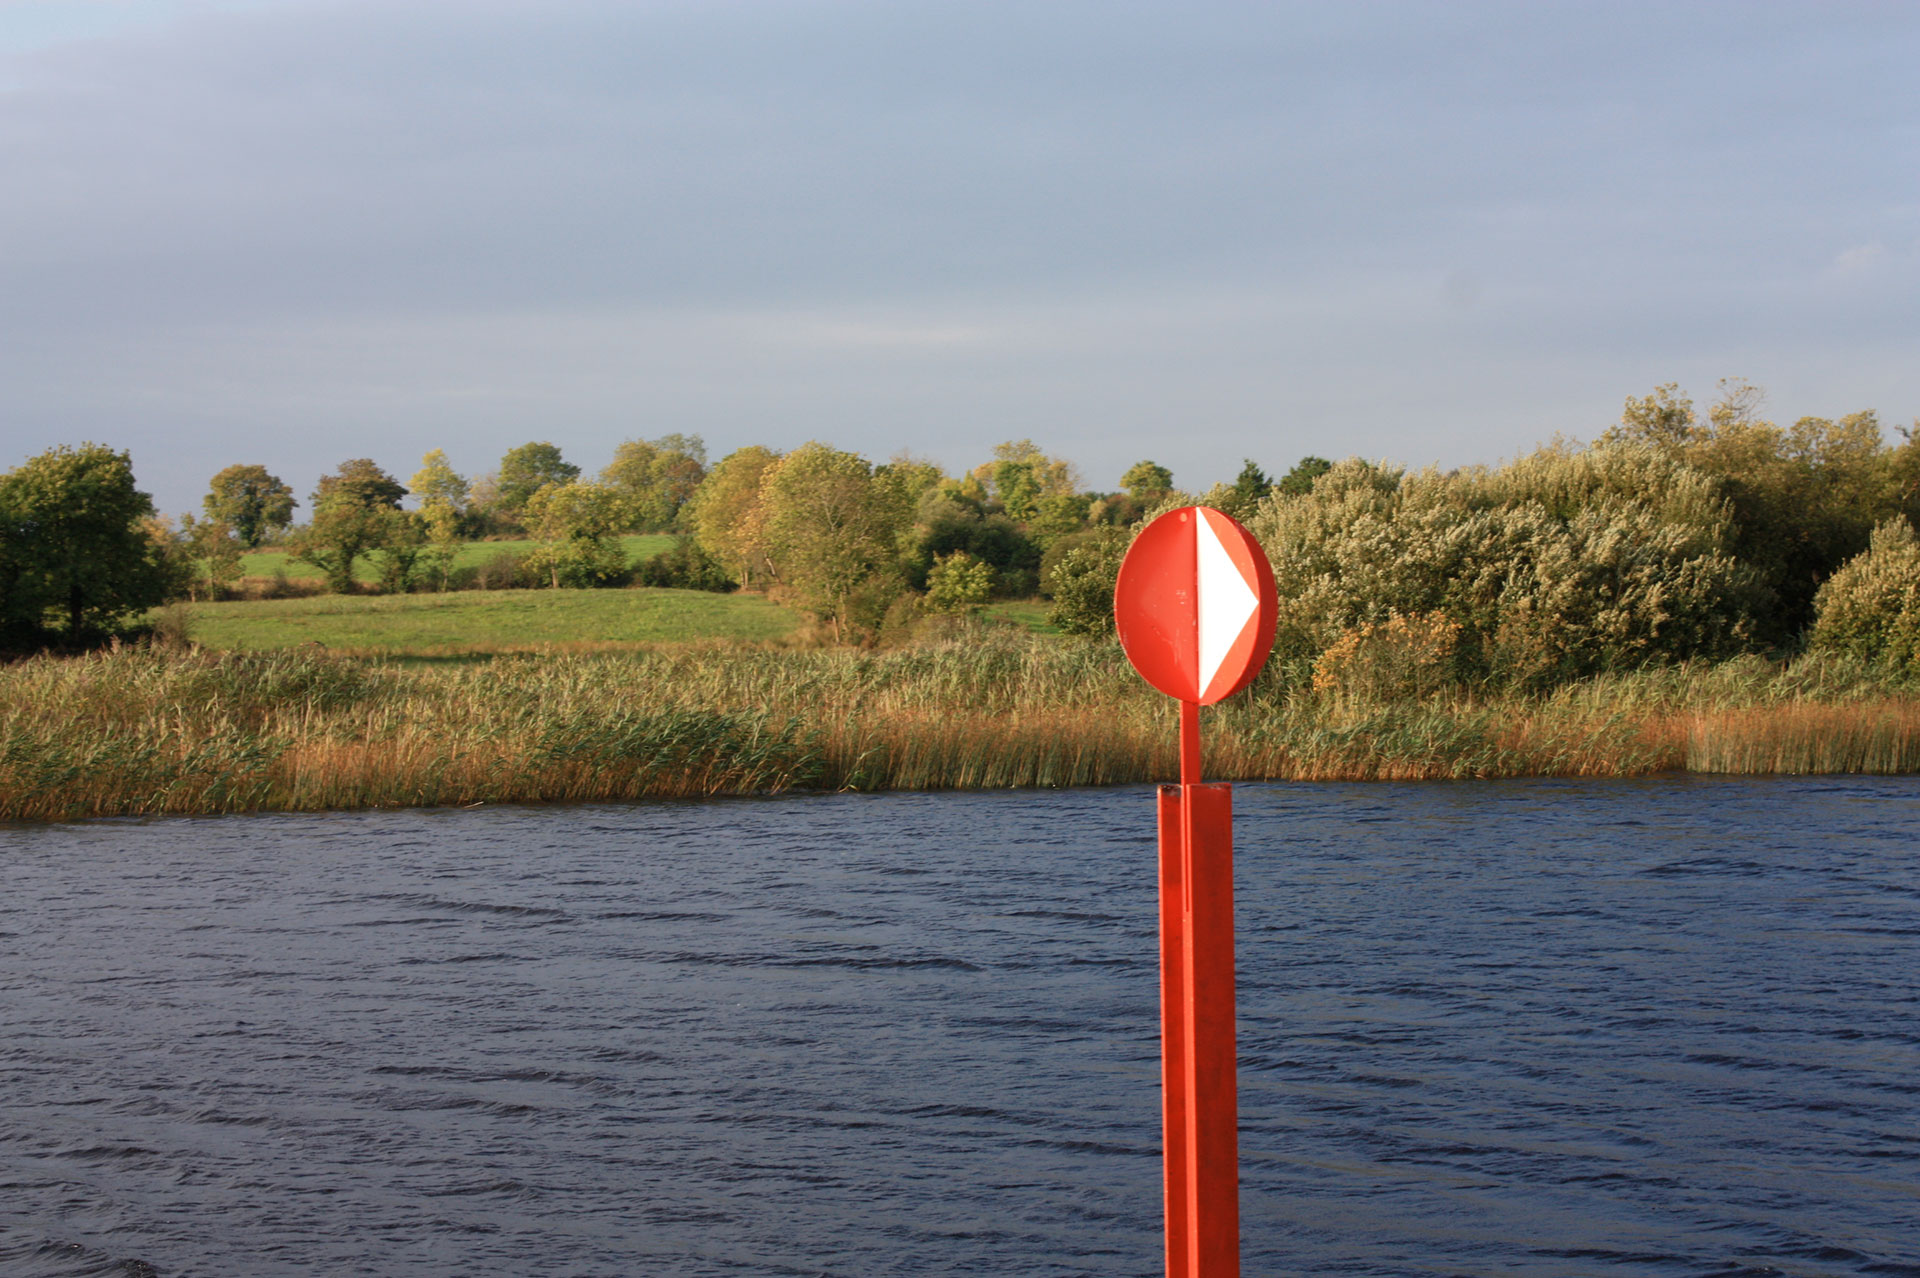 Hausboot fahren in Irland: Bojen markieren die Fahrspur